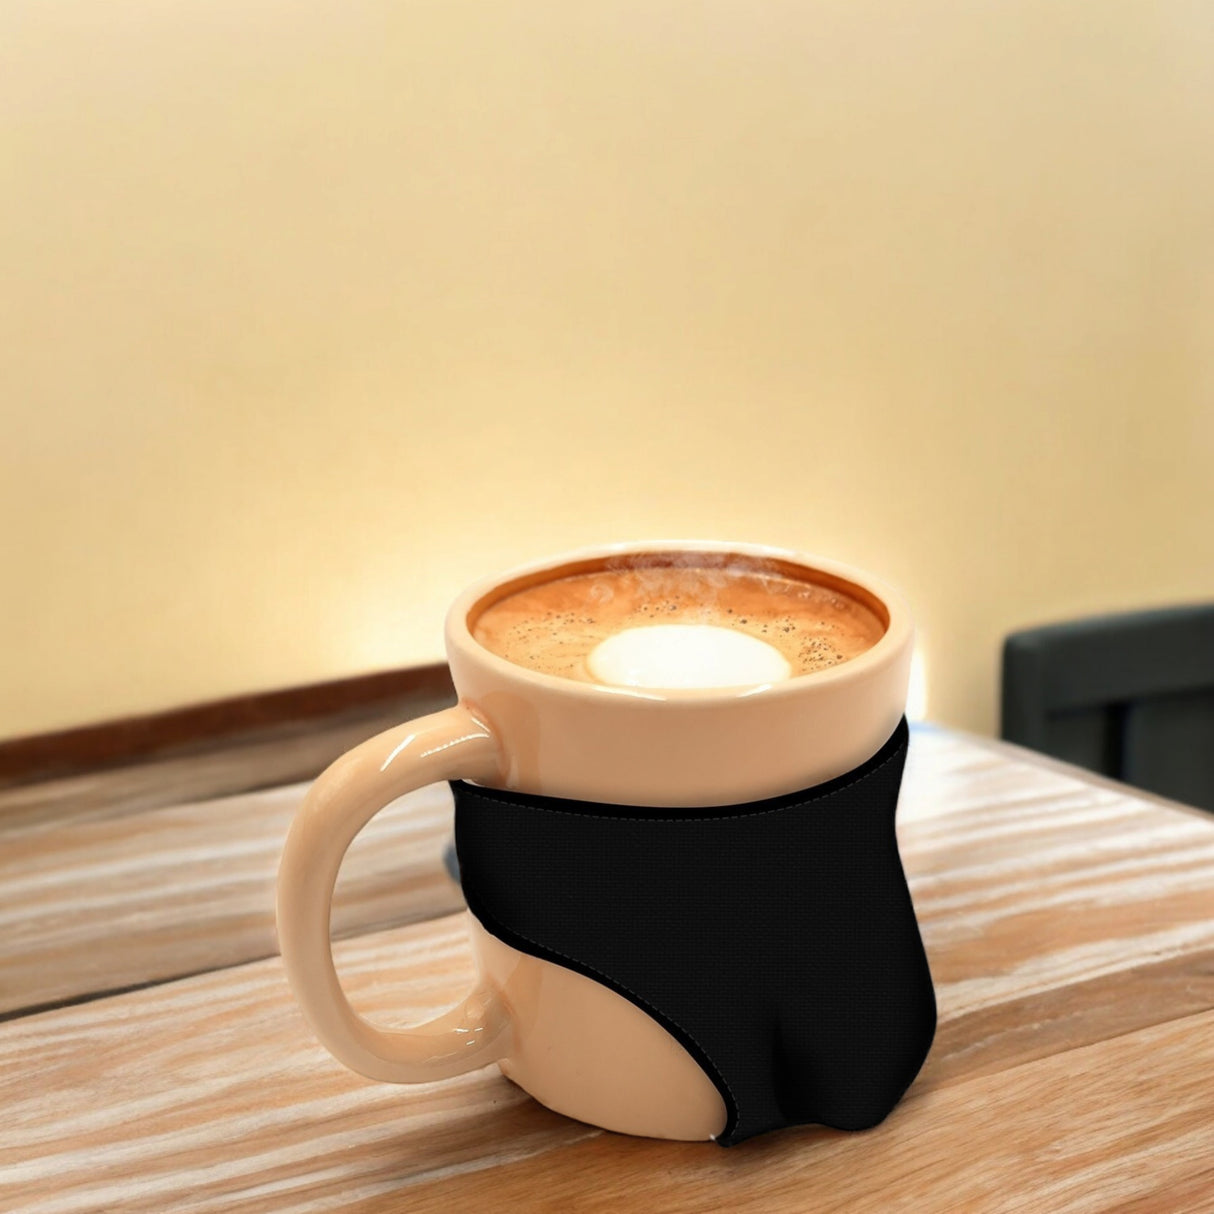 Penis Kaffeebecher Pimmel Tasse mit abnehmbarer Unterhose